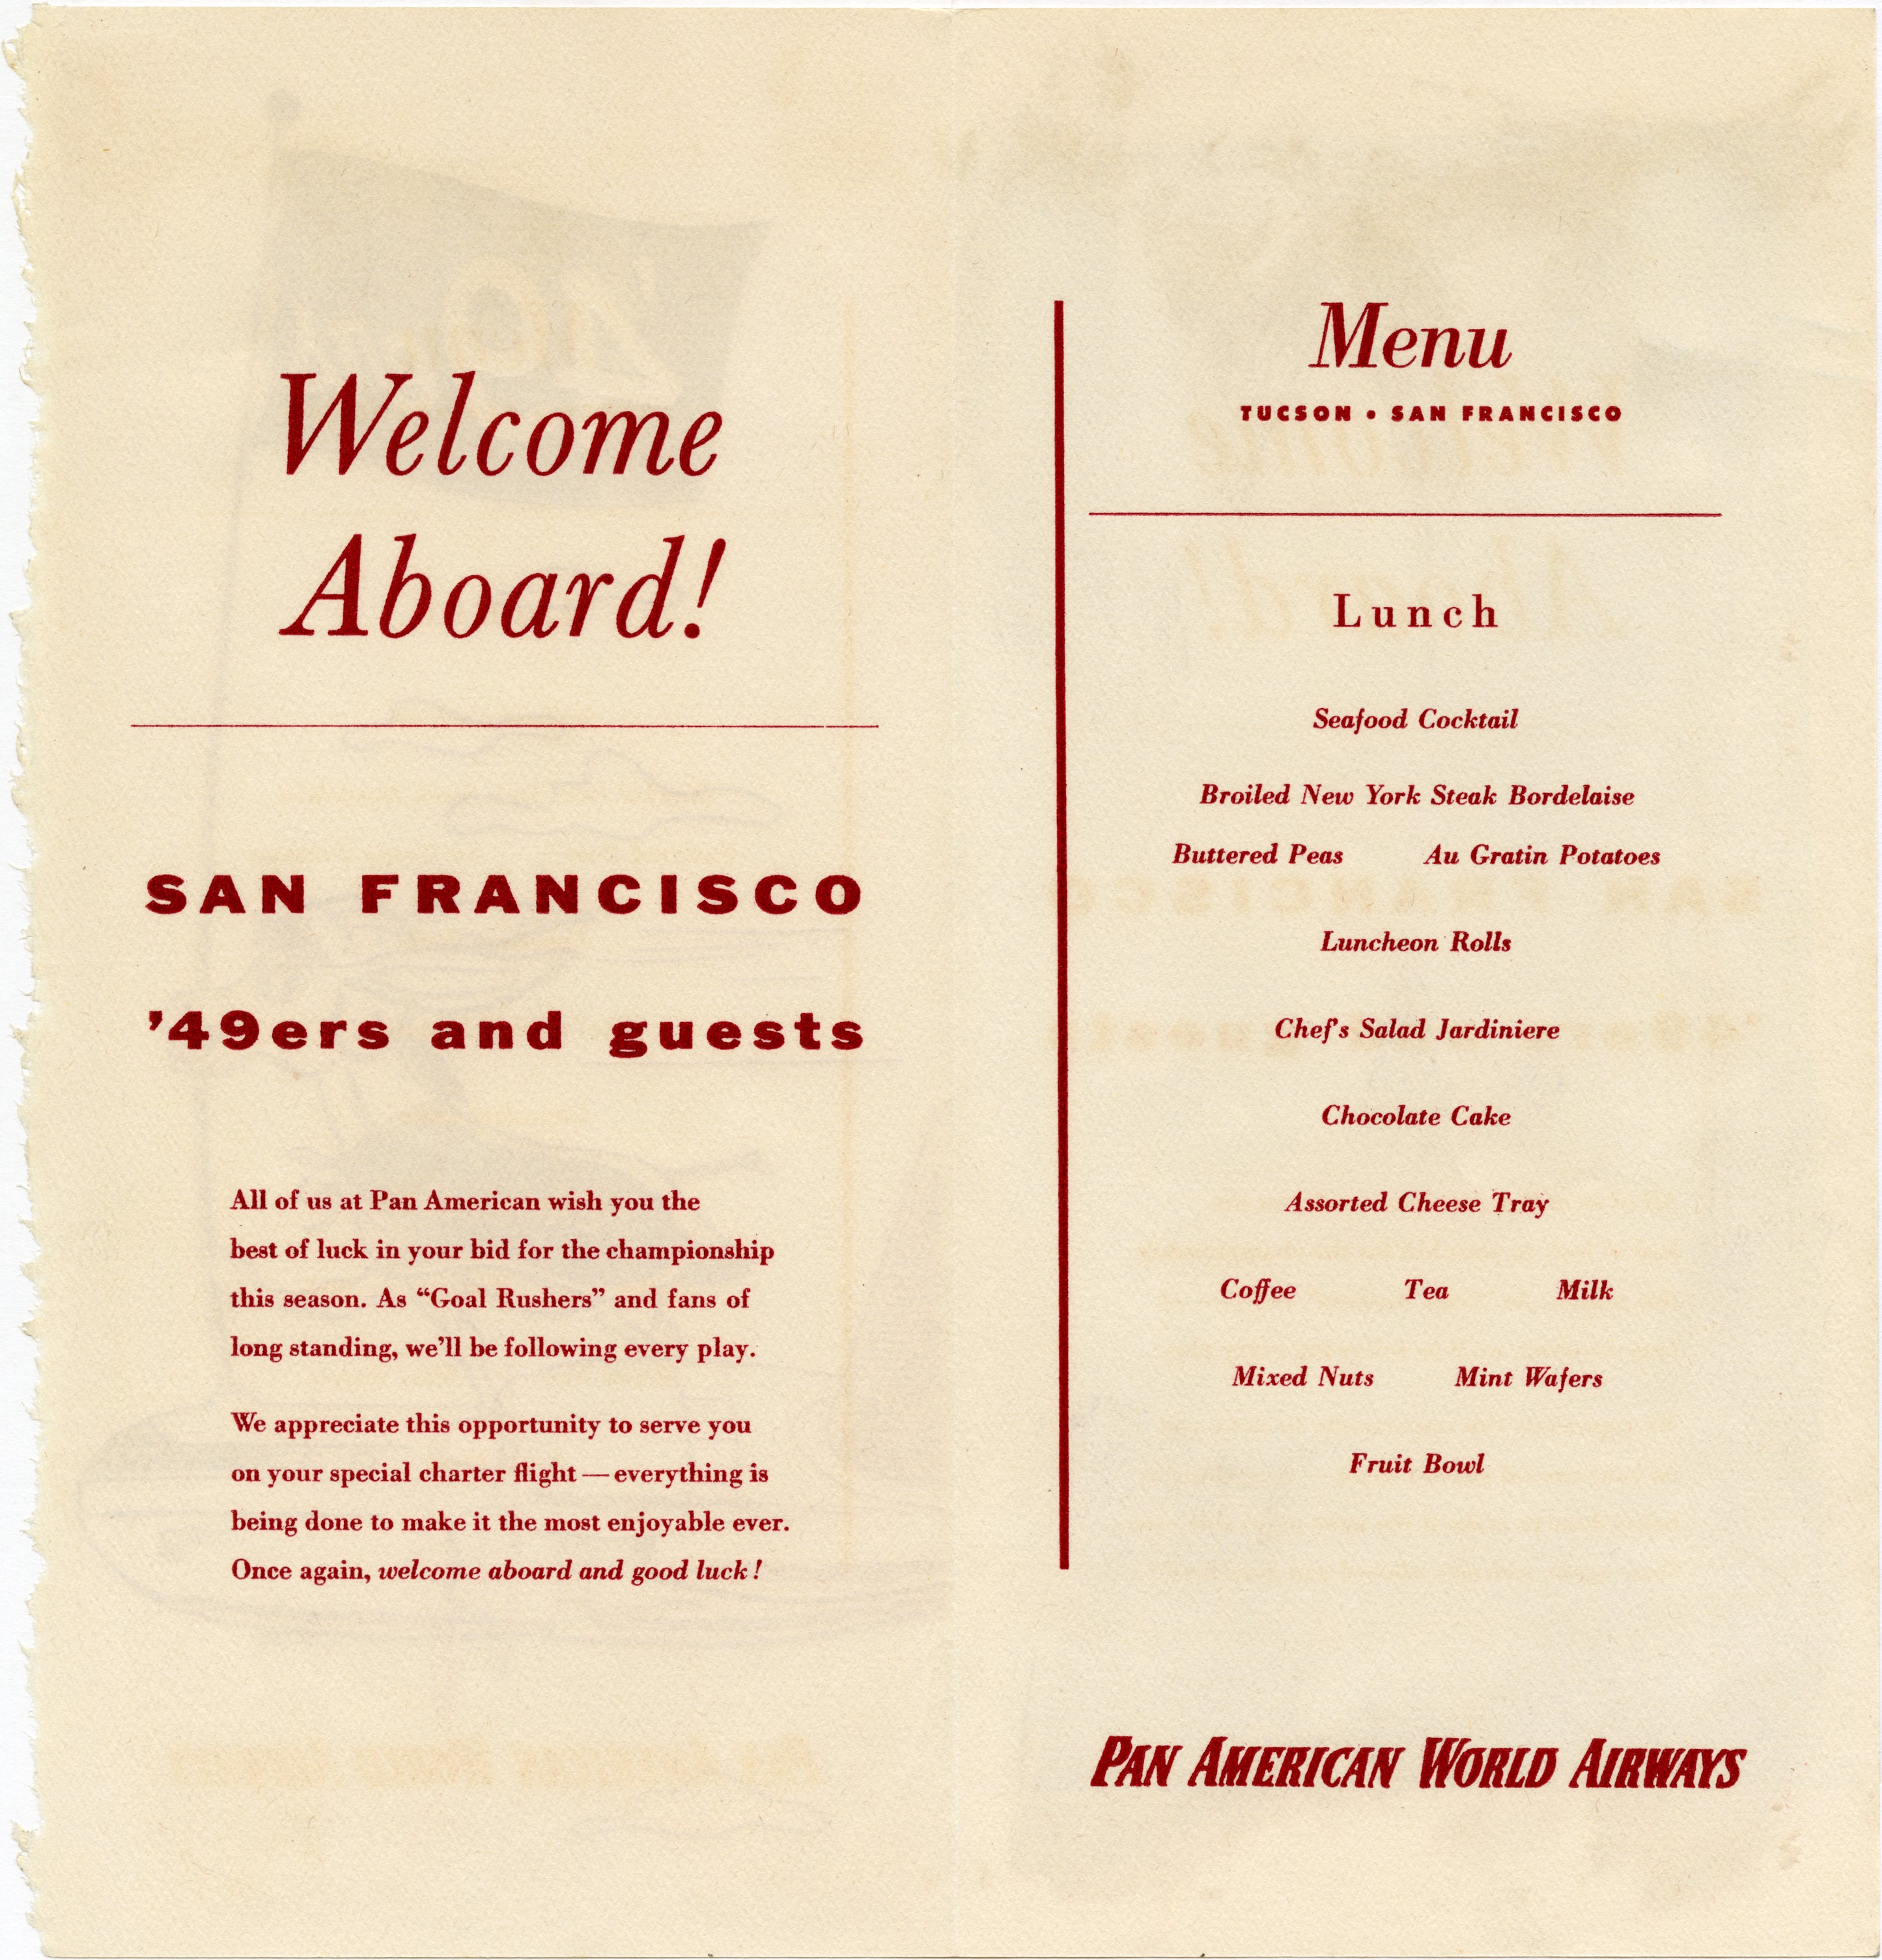 Interior Pan American World Airways charter flight menu